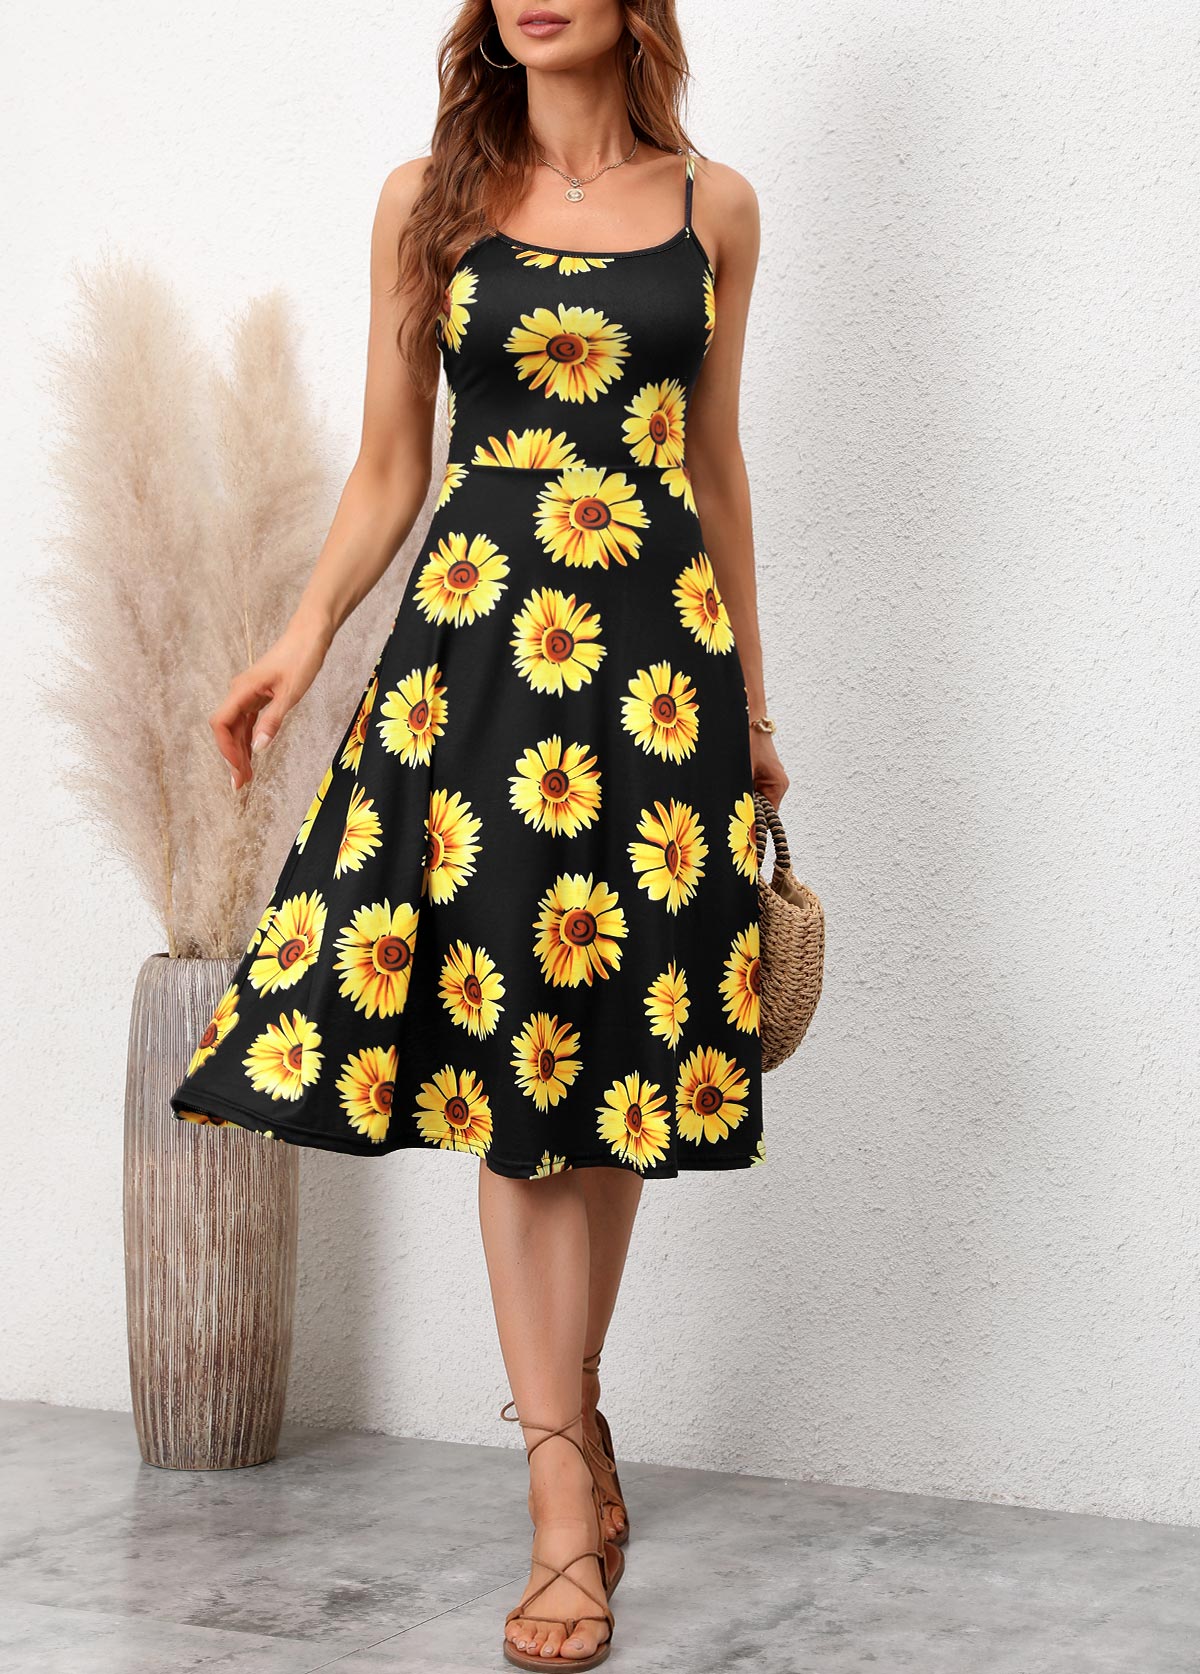 Sunflower Print Spaghetti Strap Black Dress